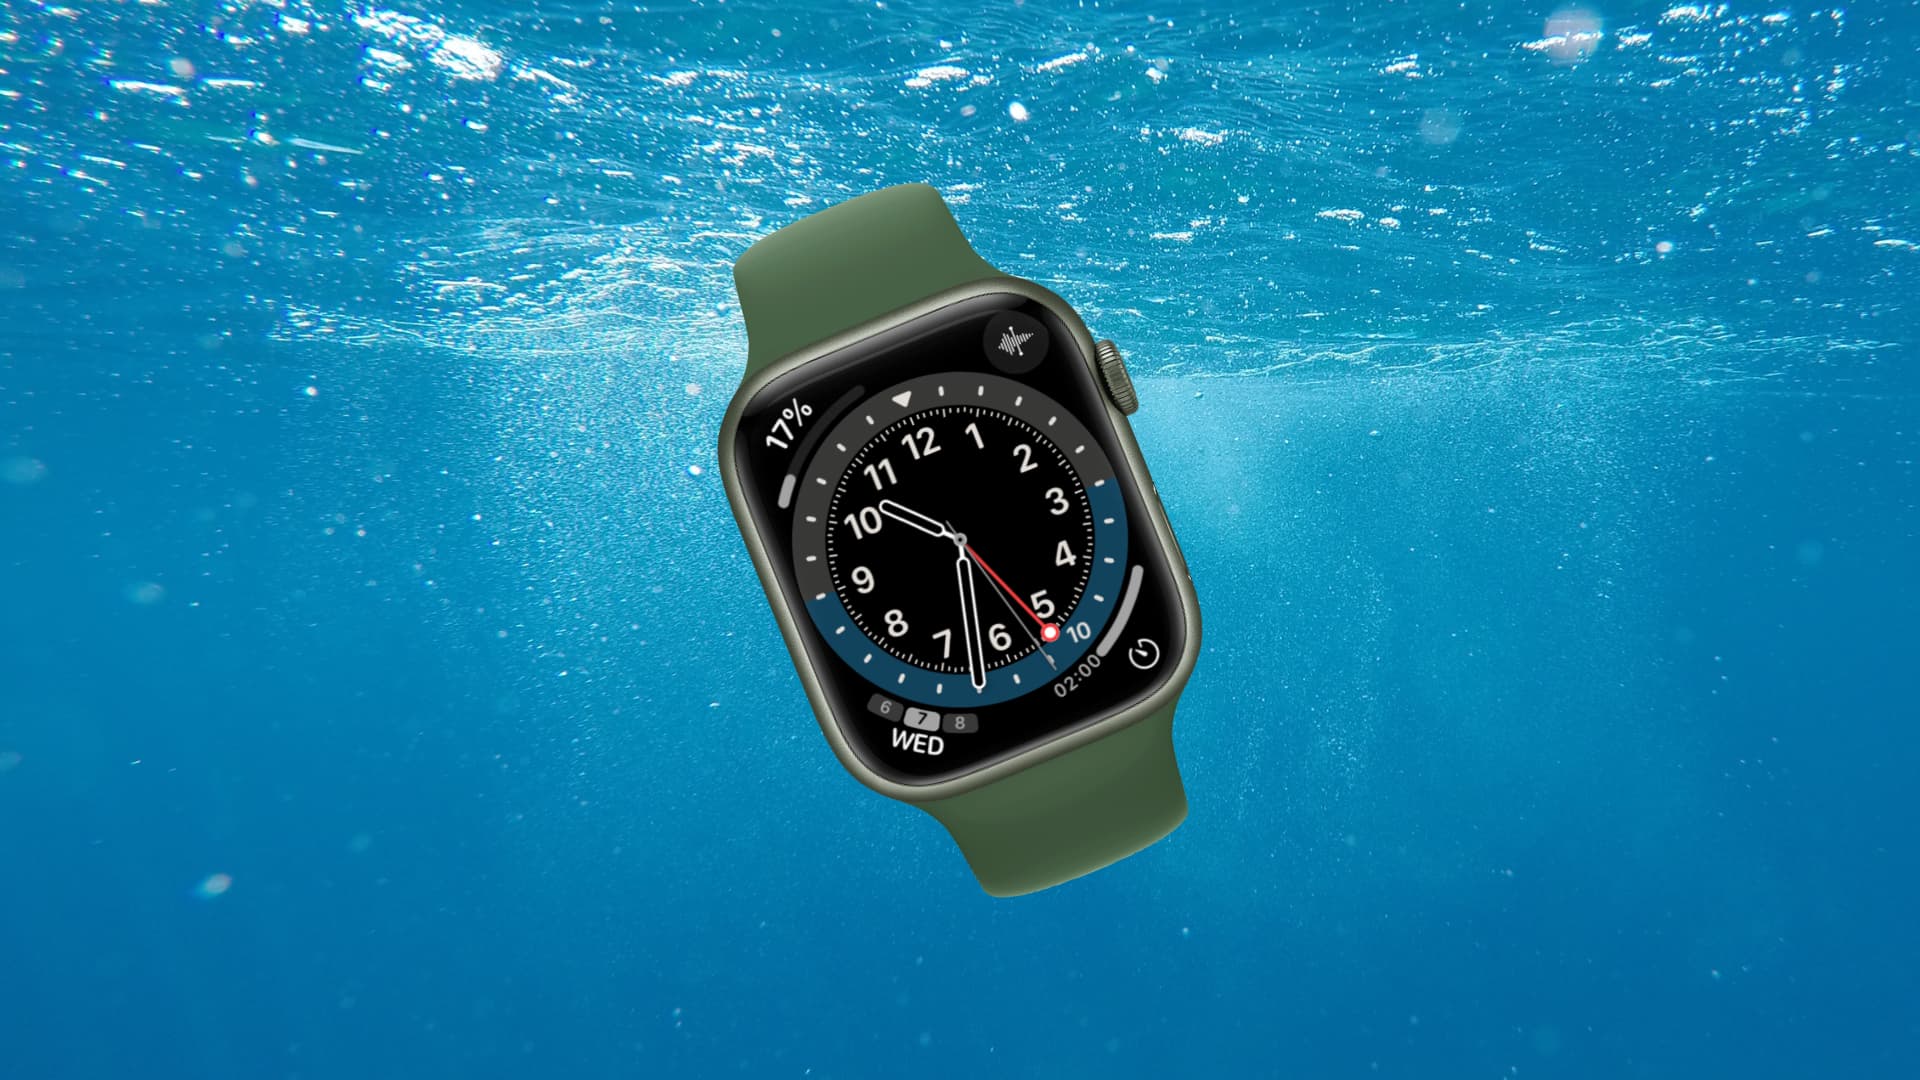 Dropped Apple Watch in water